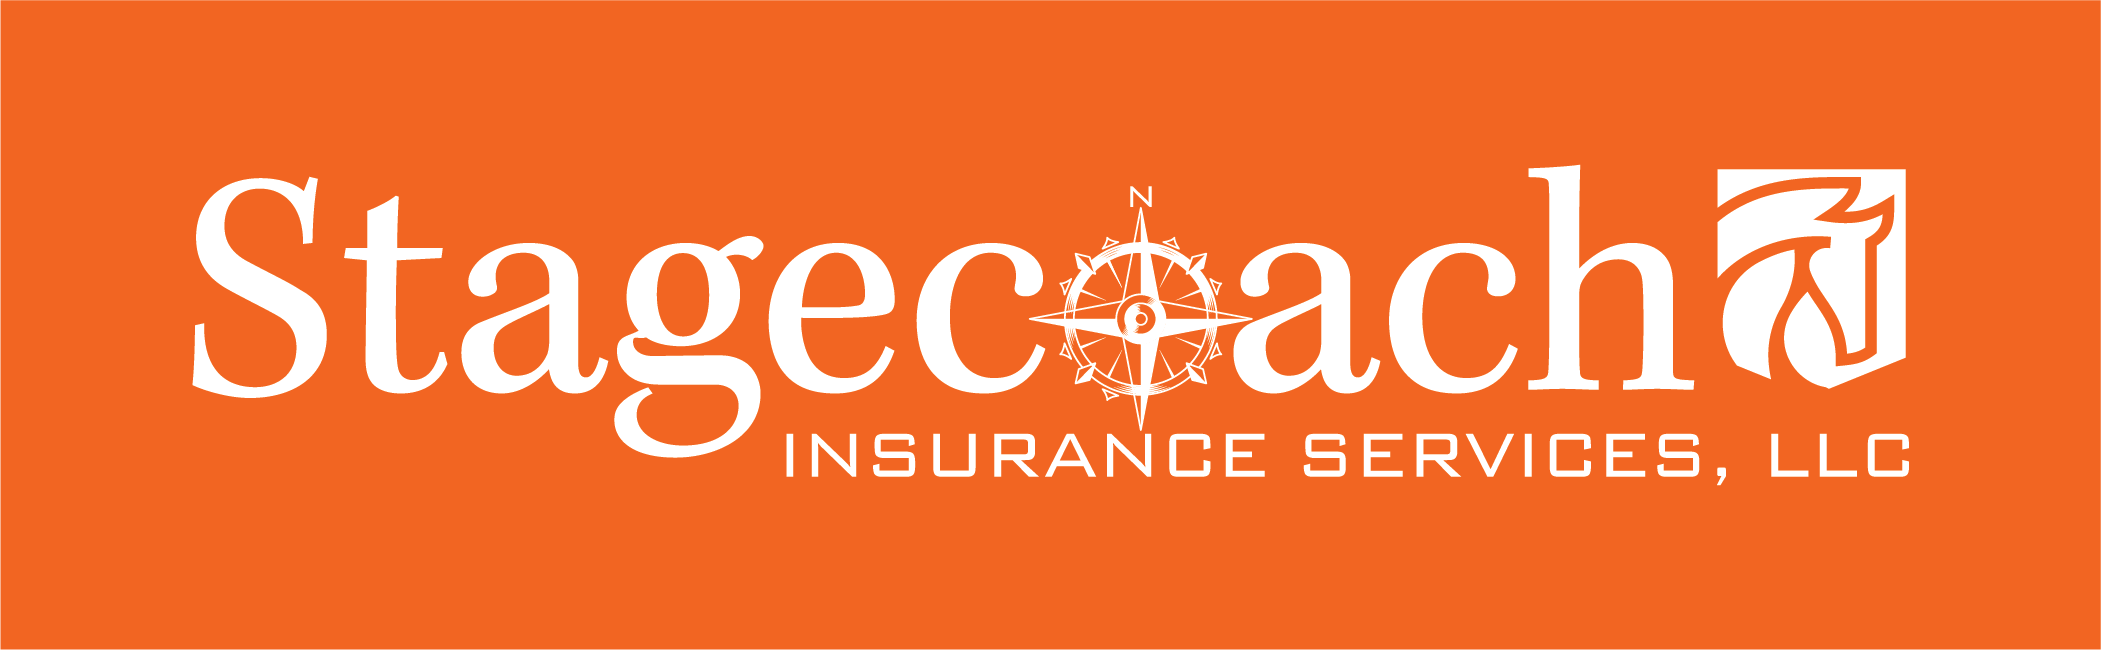 Stagecoach Insurance